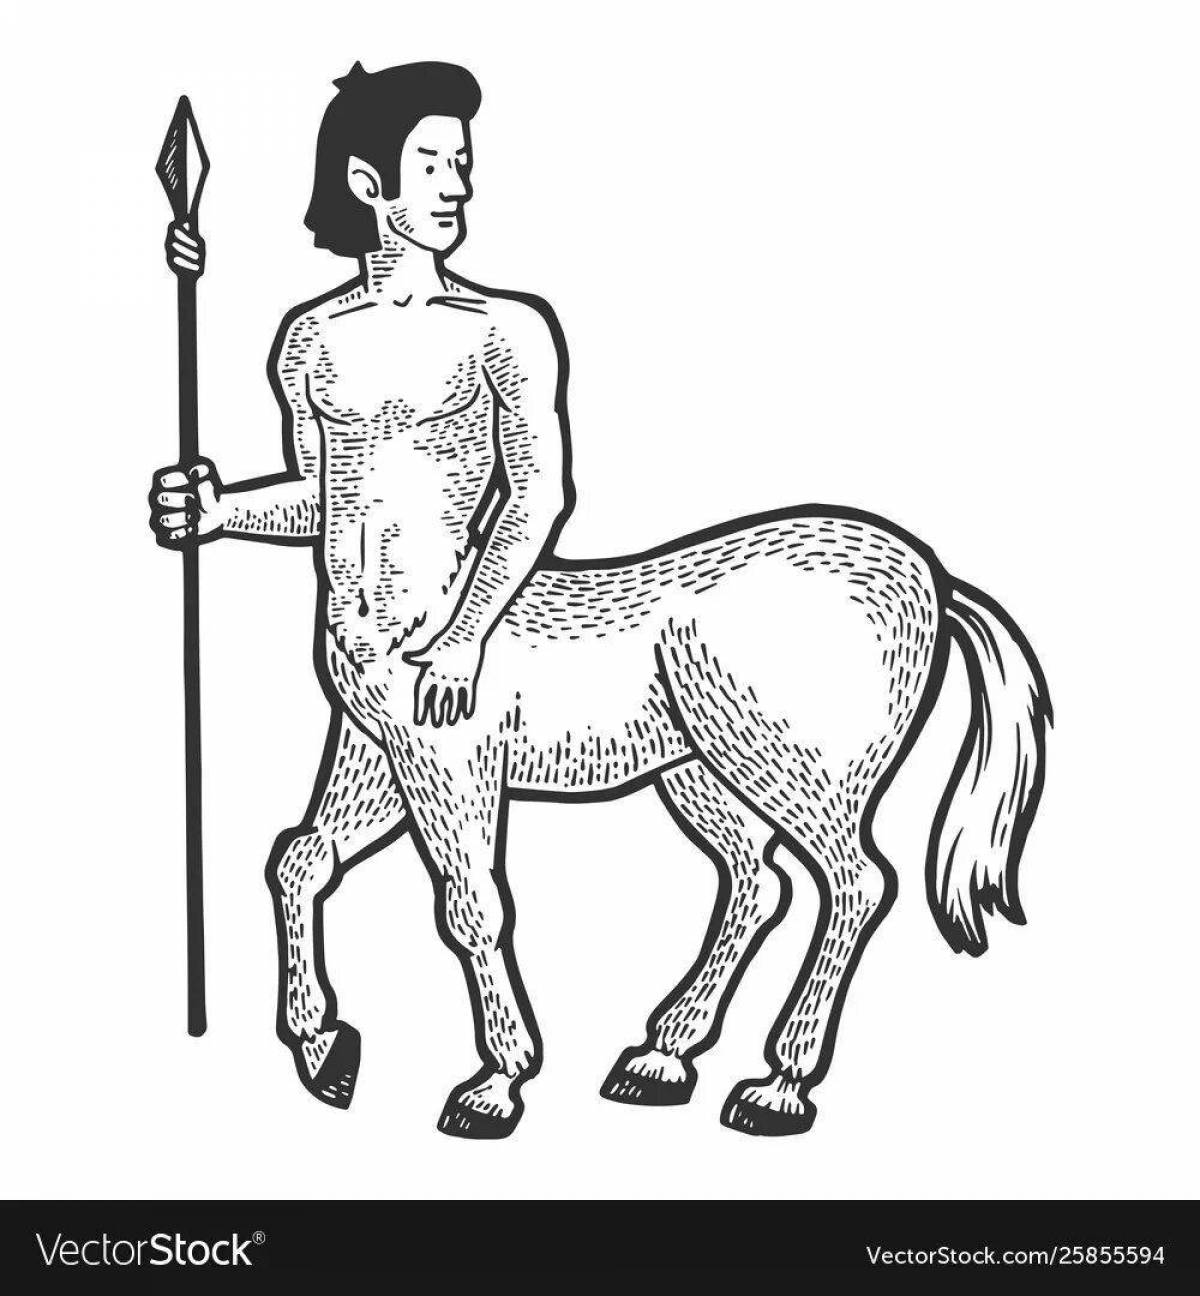 Delightful centaur coloring book for kids